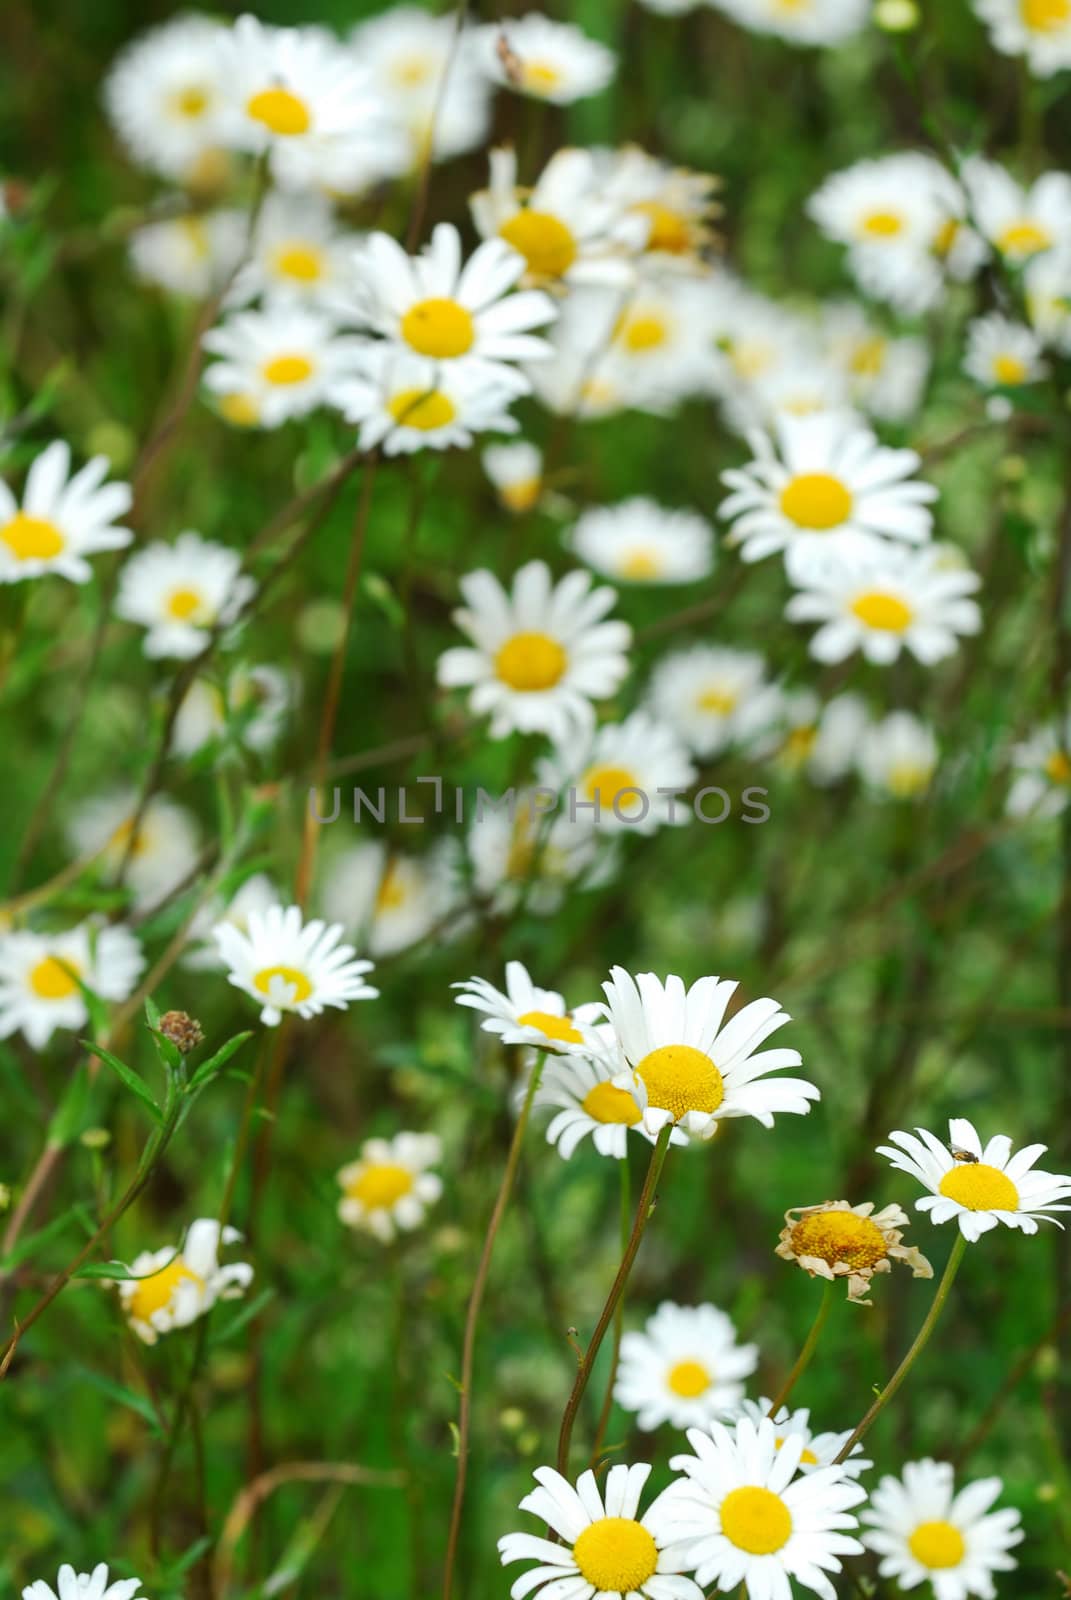 Wild daisies by elenathewise